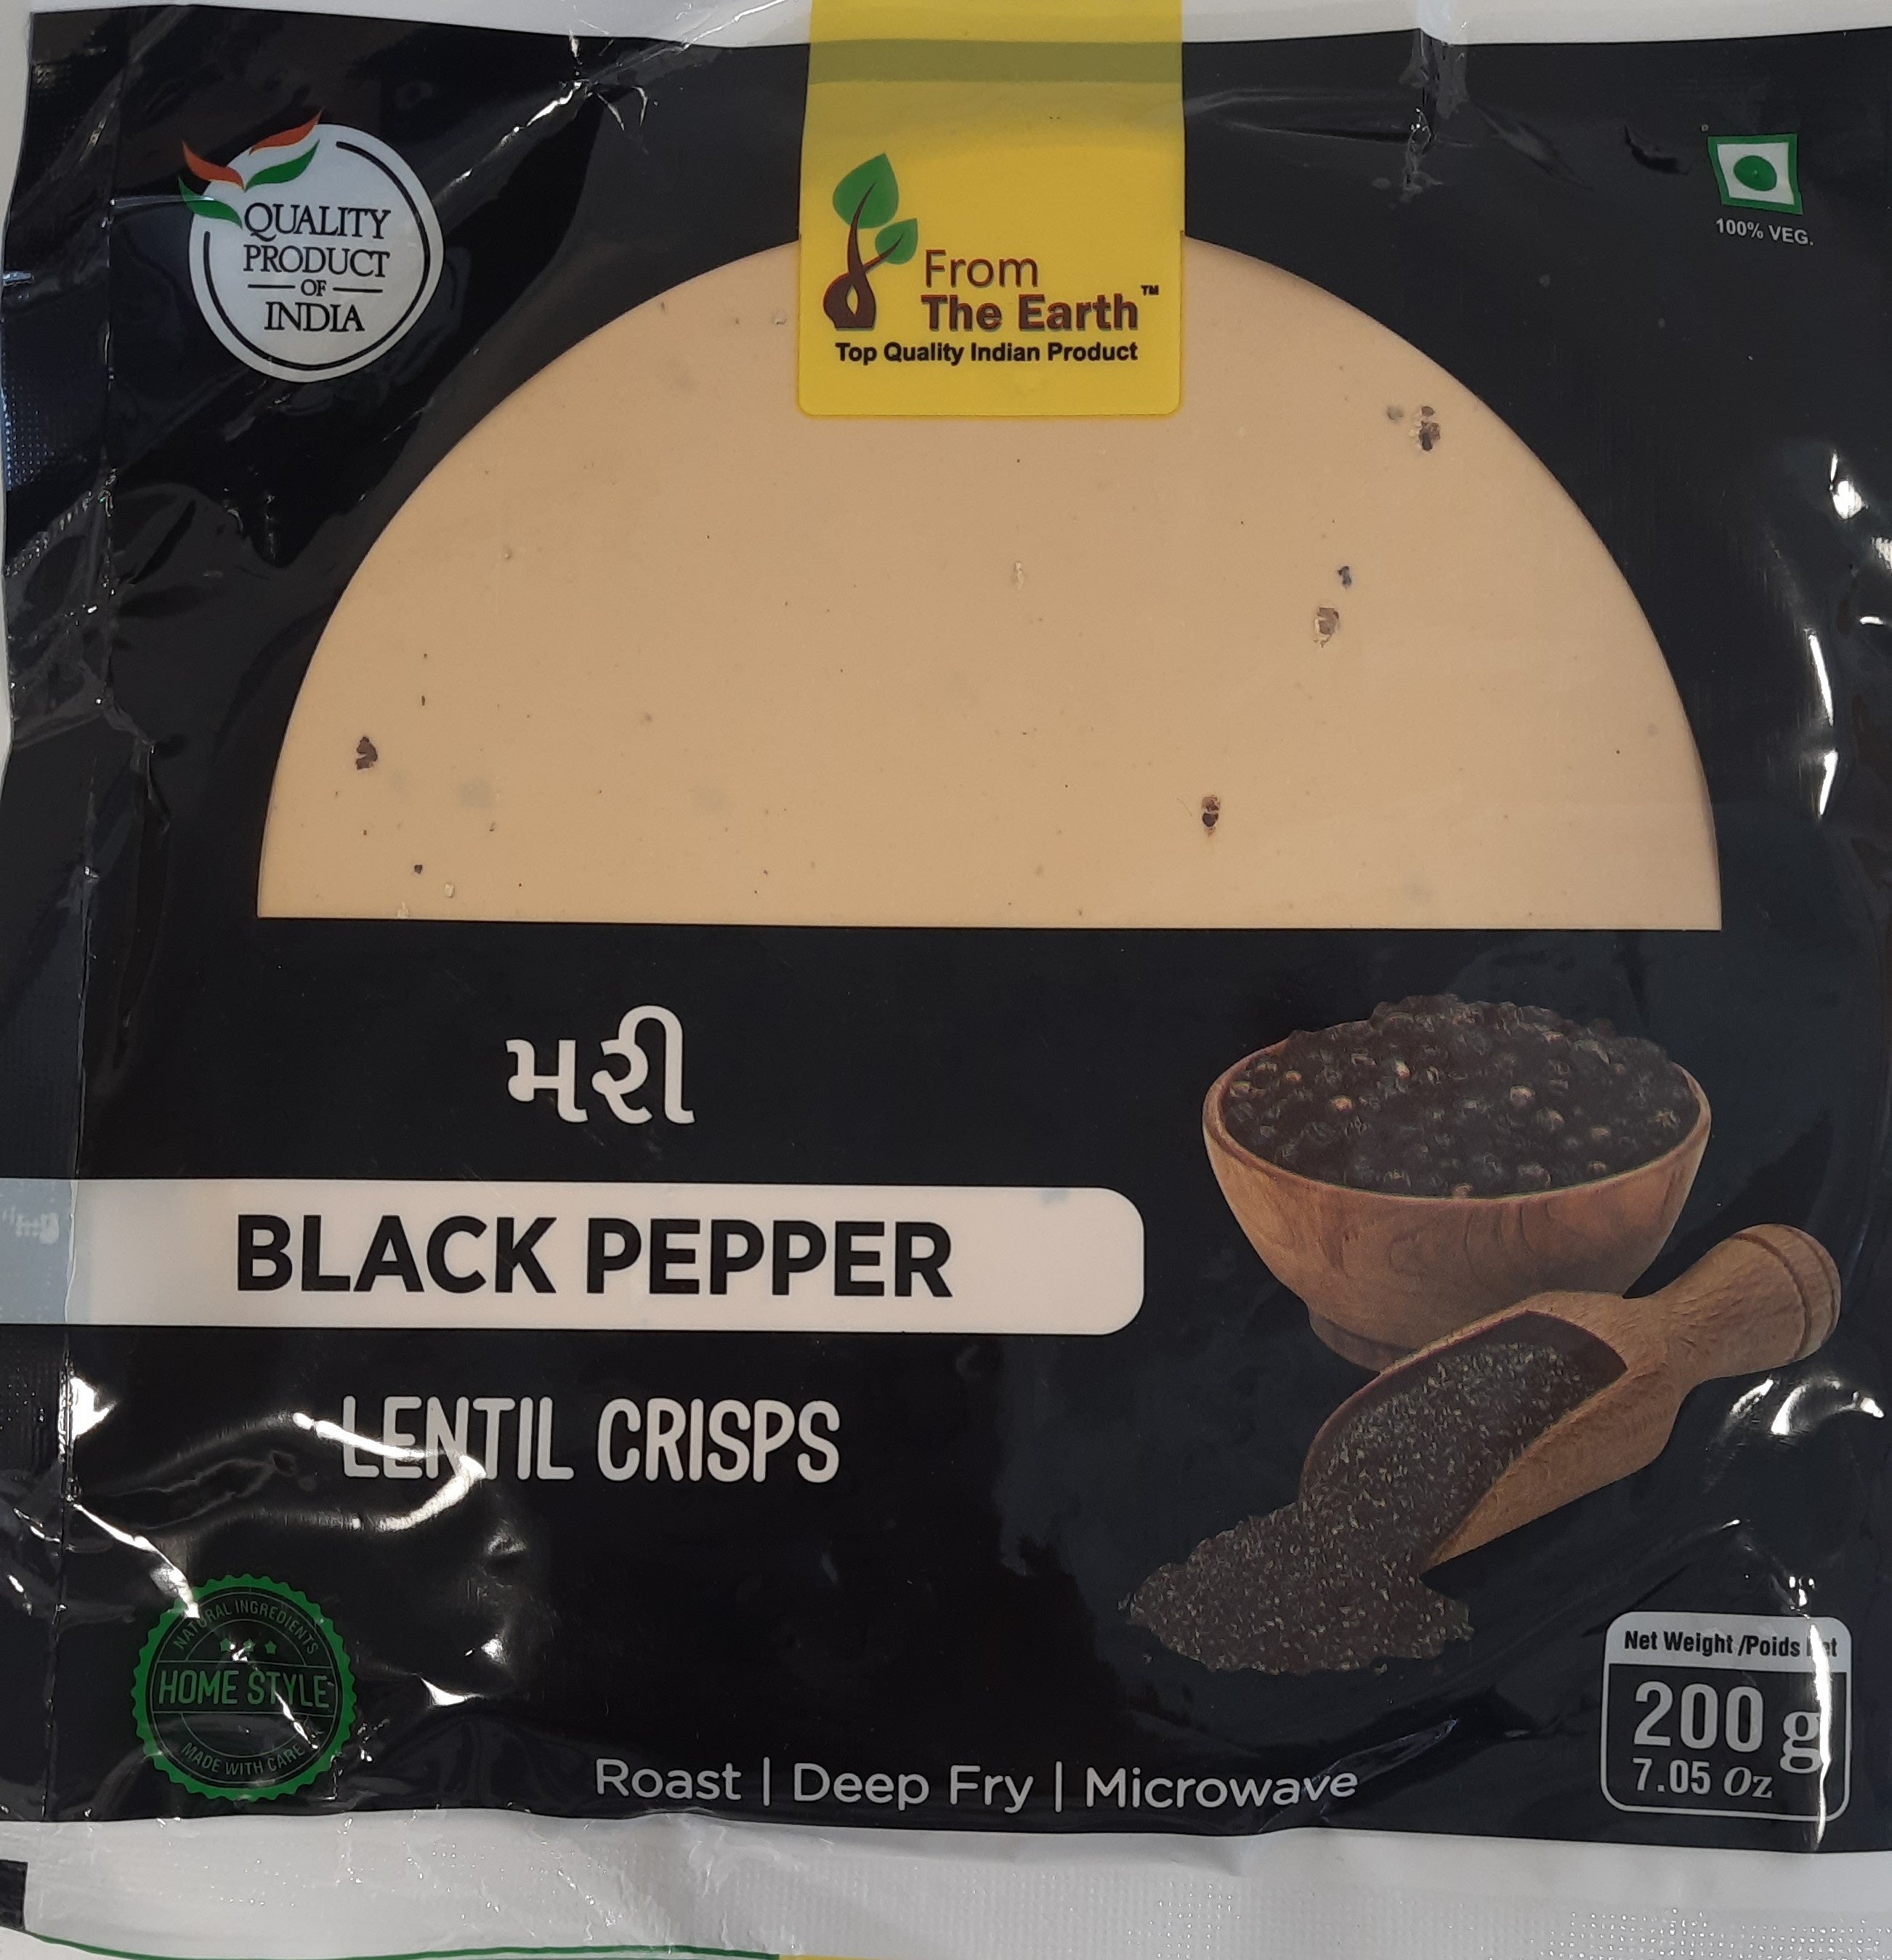 From the Earth - Black Pepper Mari Papad 200g